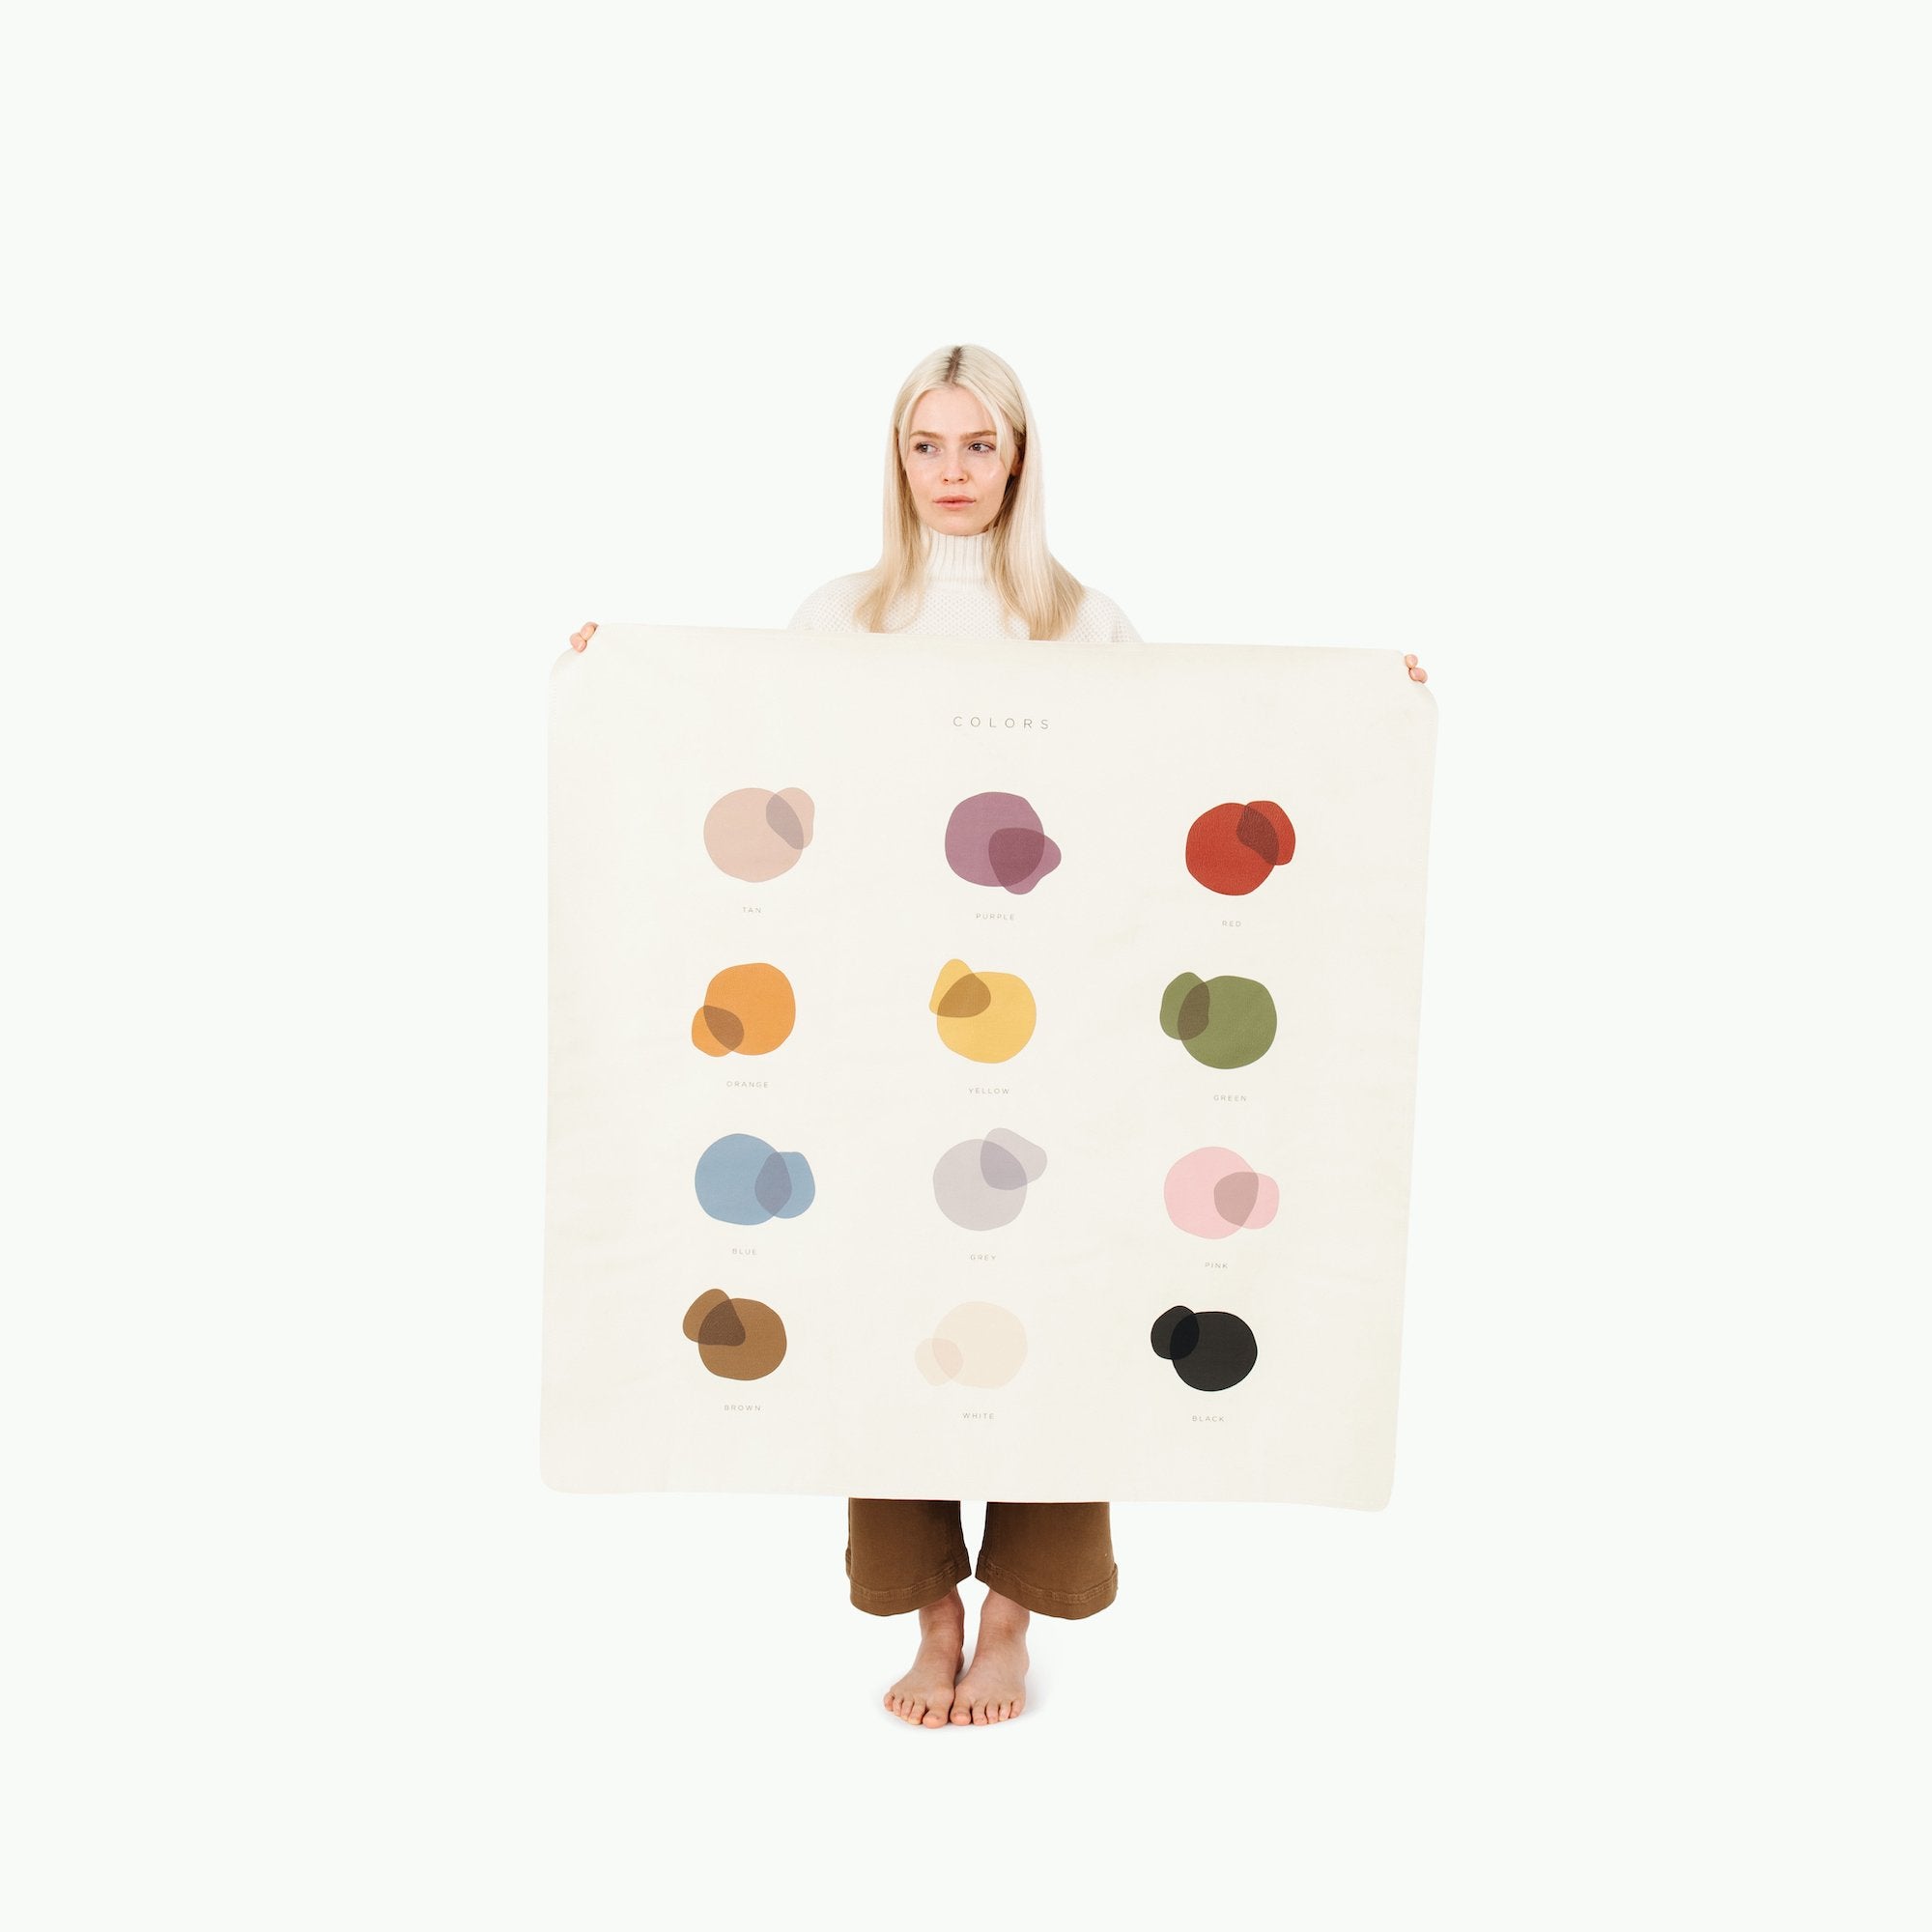 Colors@Woman holding the Colors Mini Mat